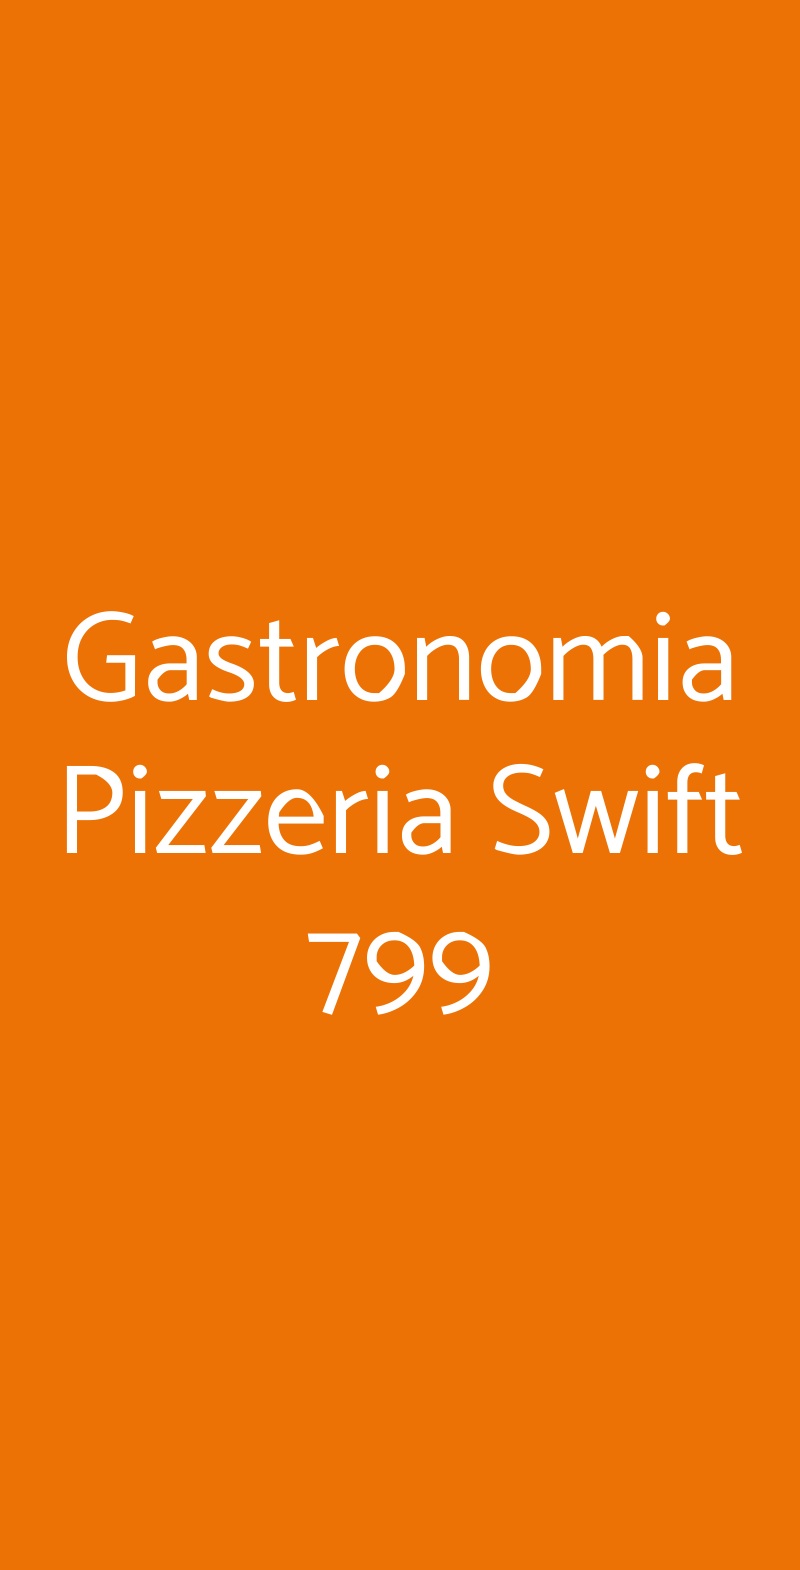 Gastronomia Pizzeria Swift 799 Siracusa menù 1 pagina